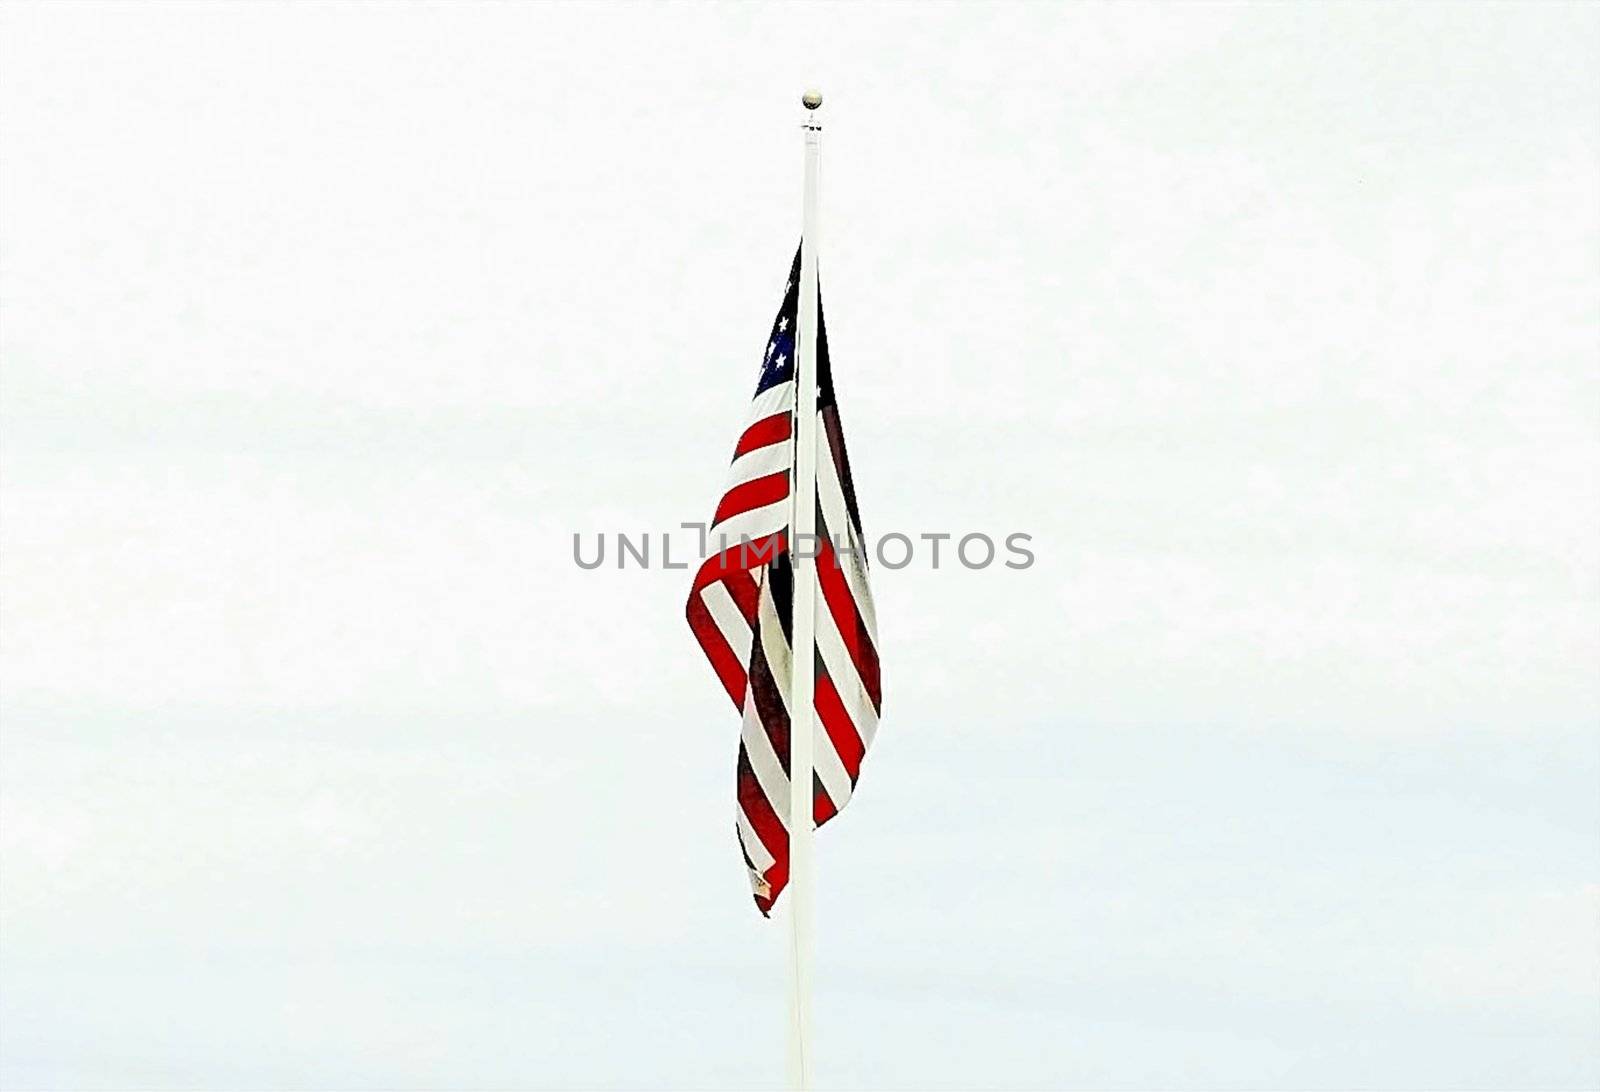 Washed US flag using overexposure to give white image